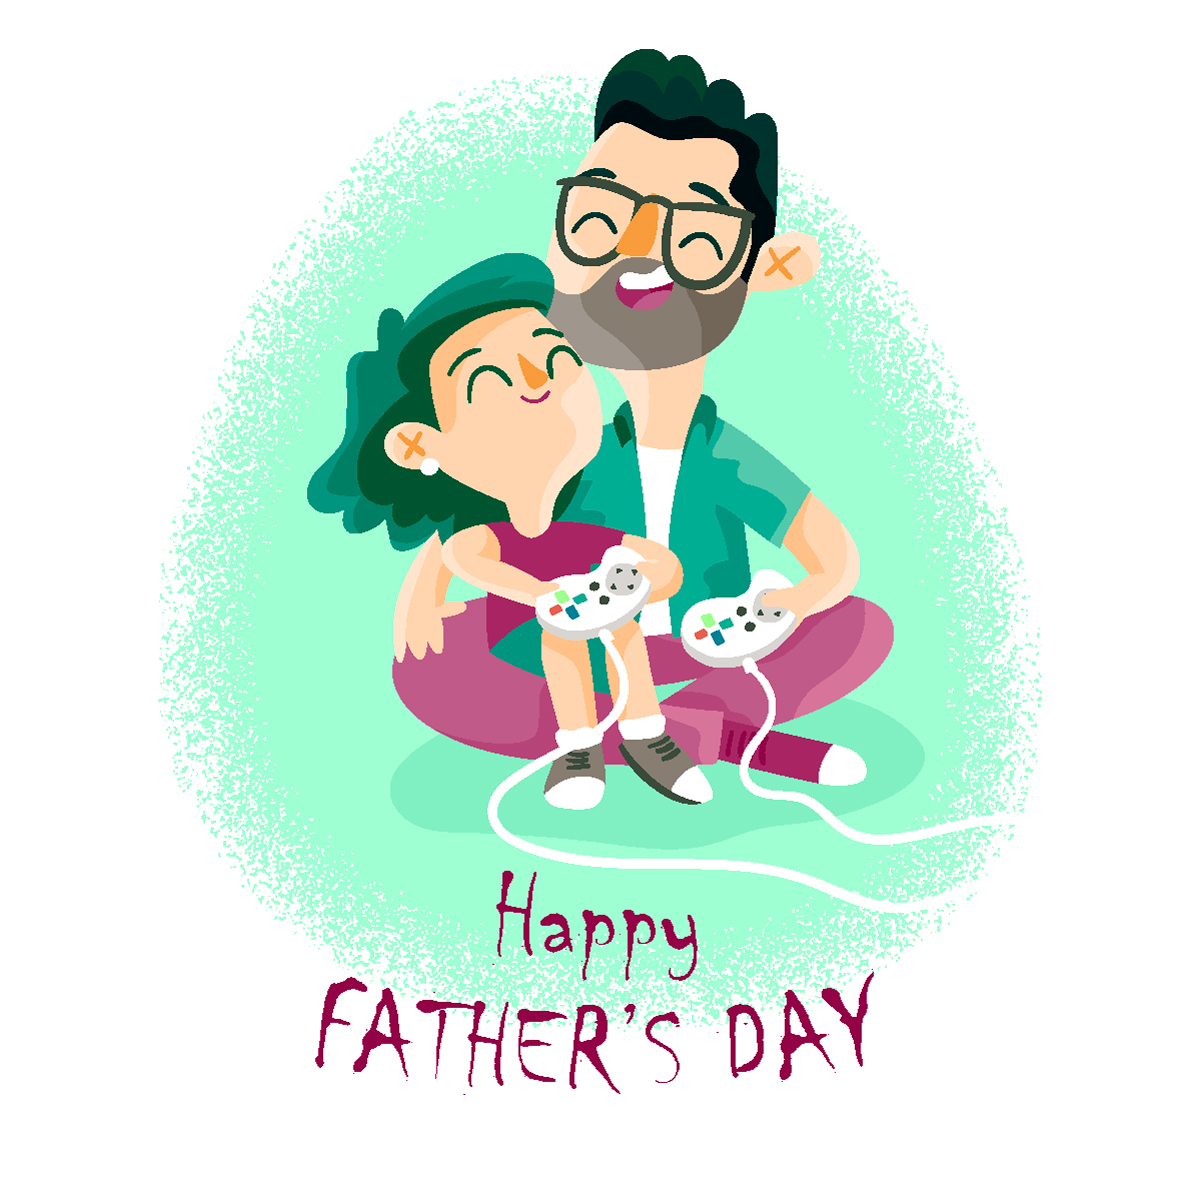 Happy father's Day иллюстрация